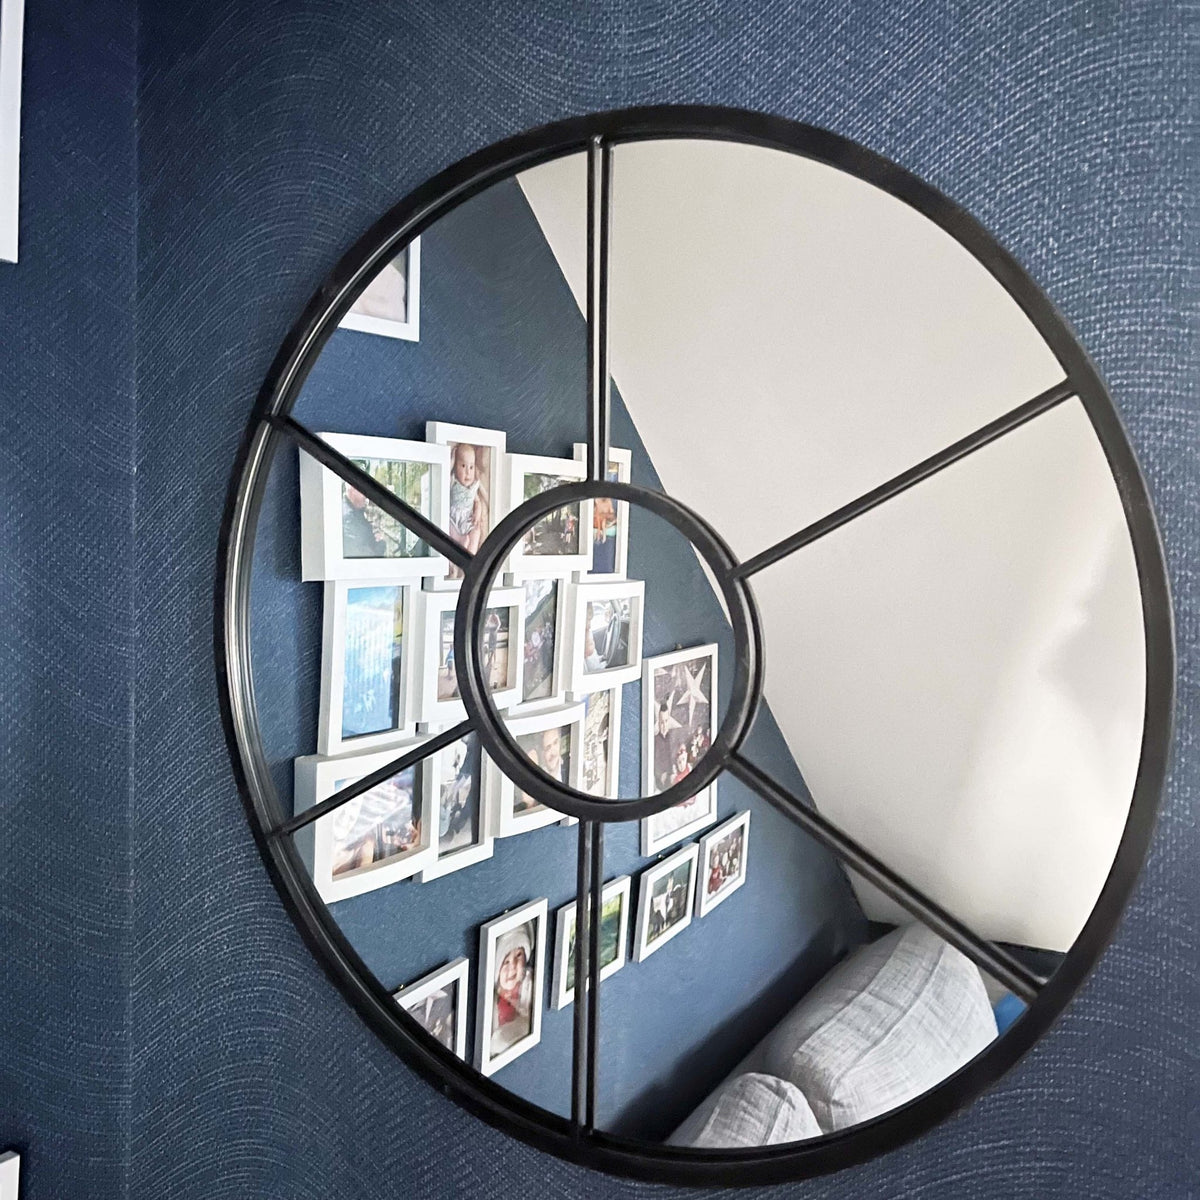 Aperta Iron Round Window Style Mirror Black on blue background